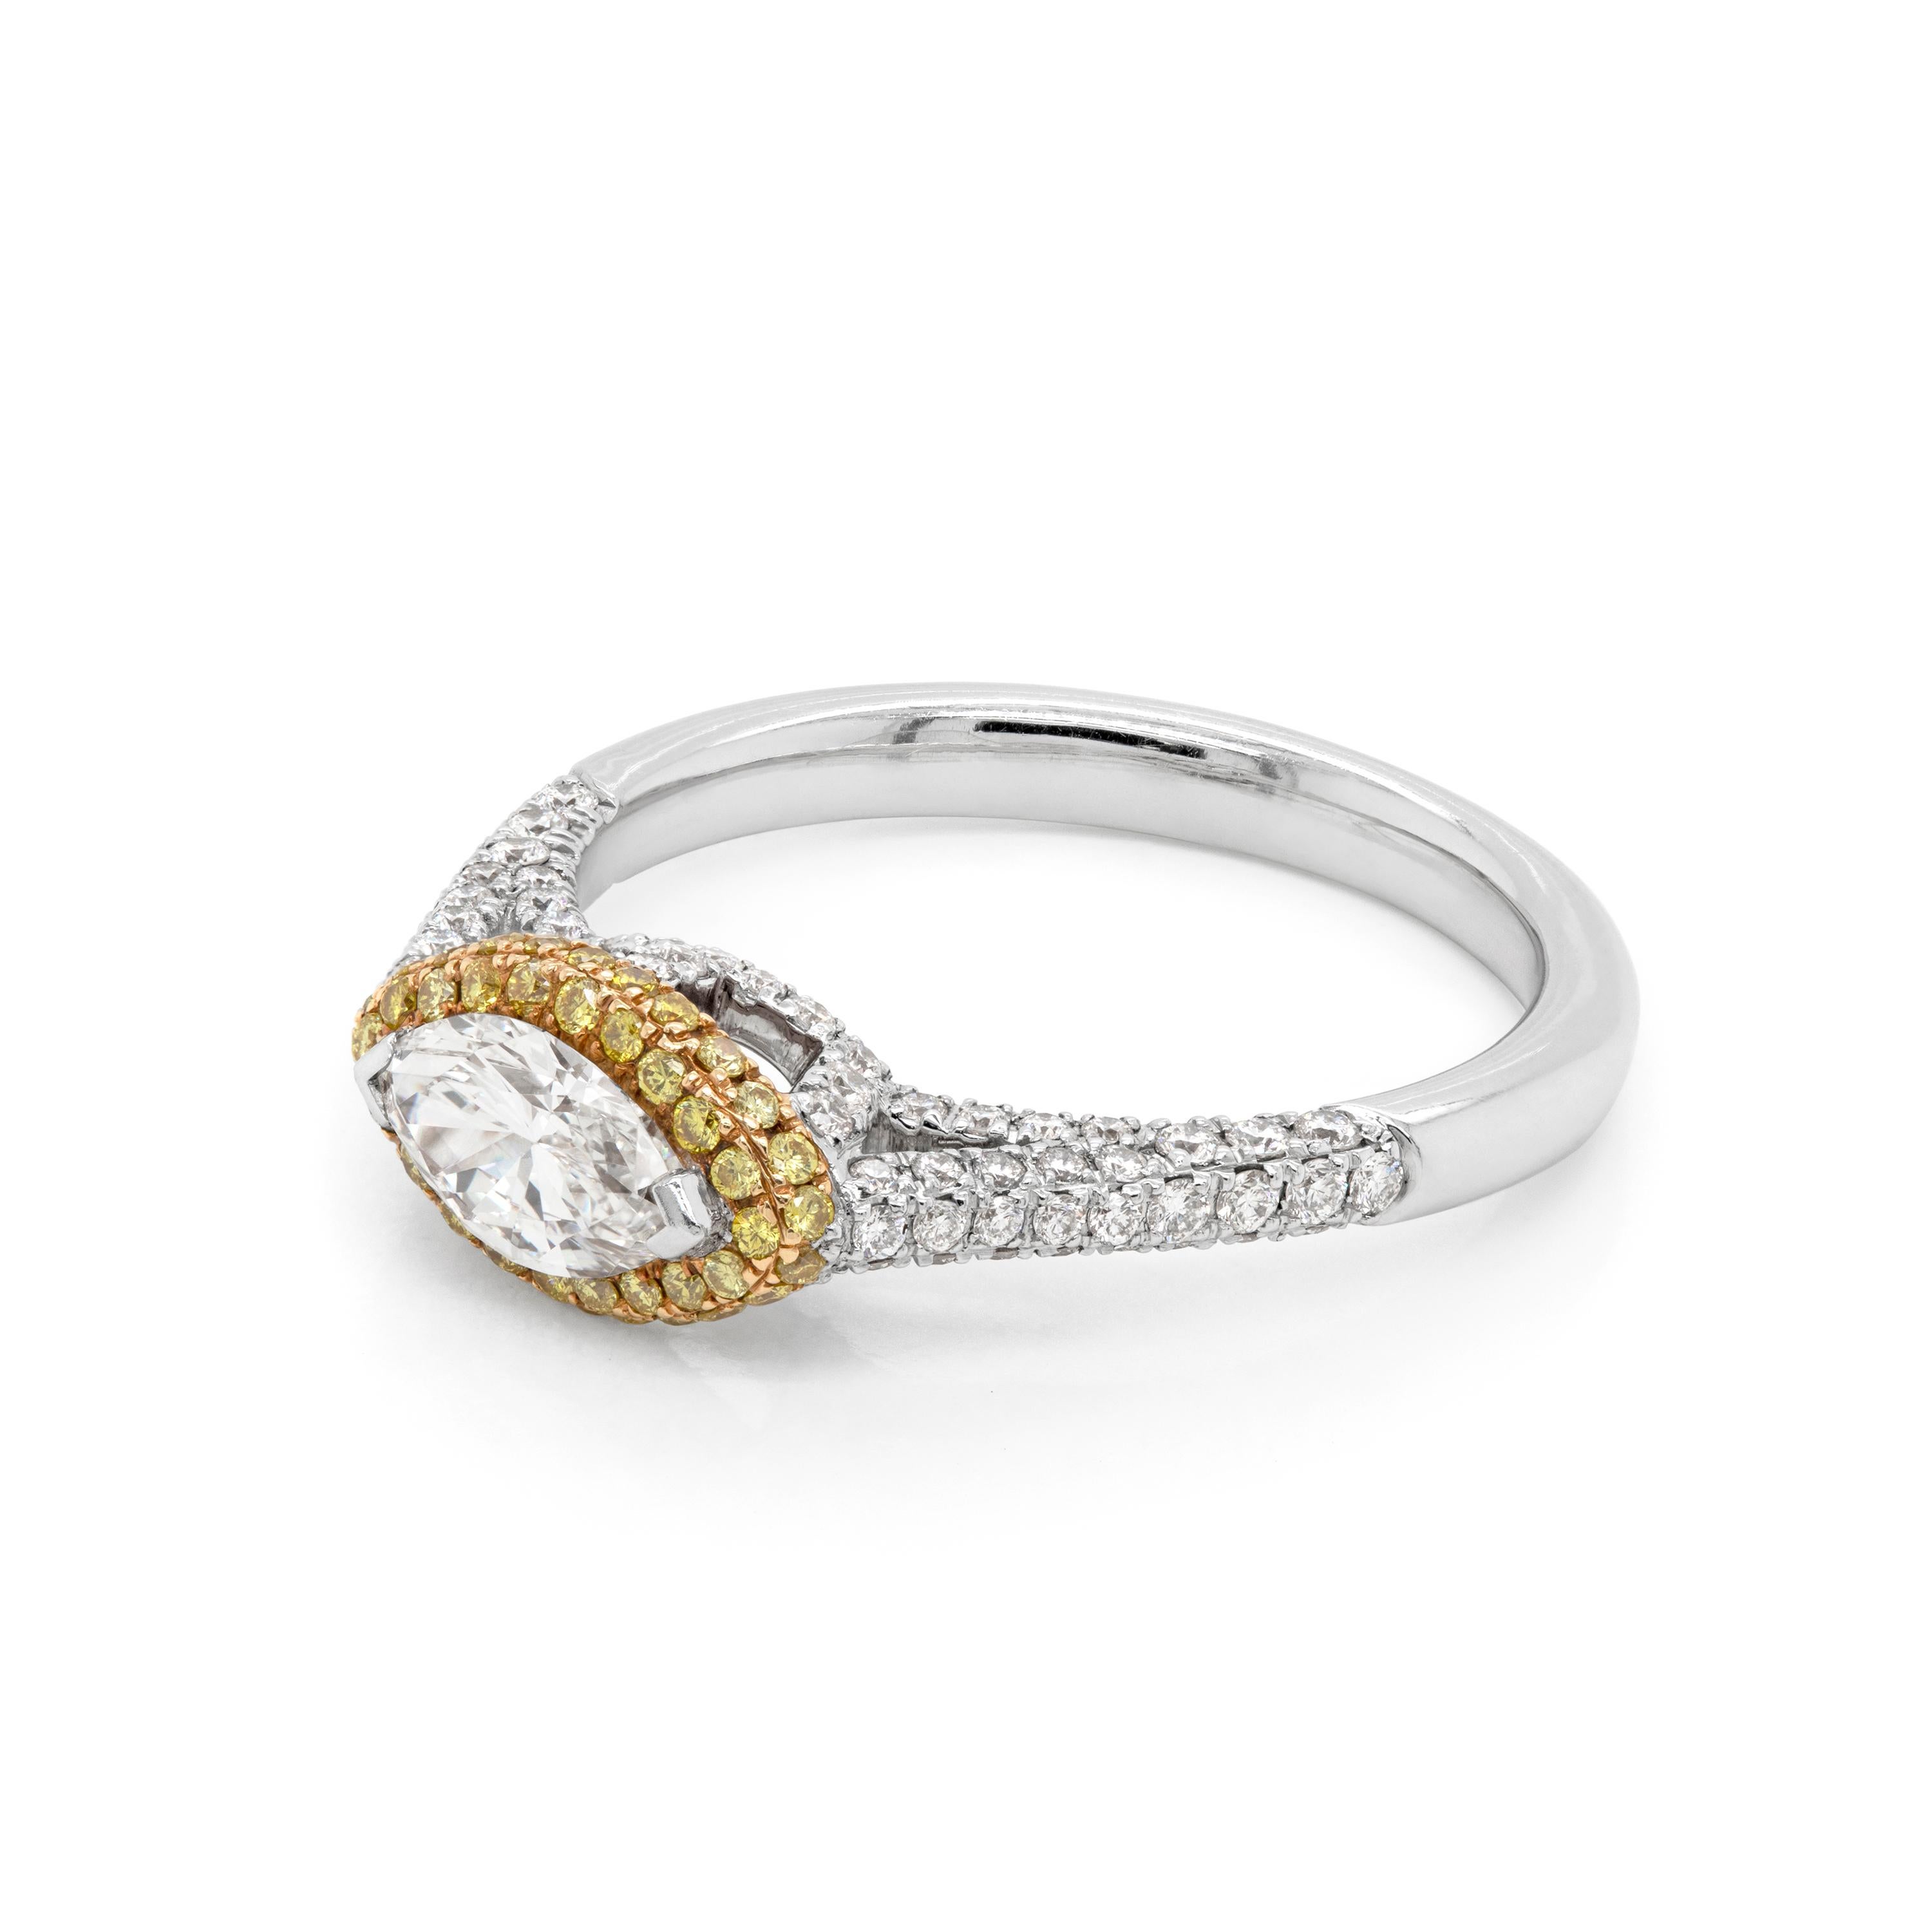 2 carat marquise diamond ring on finger